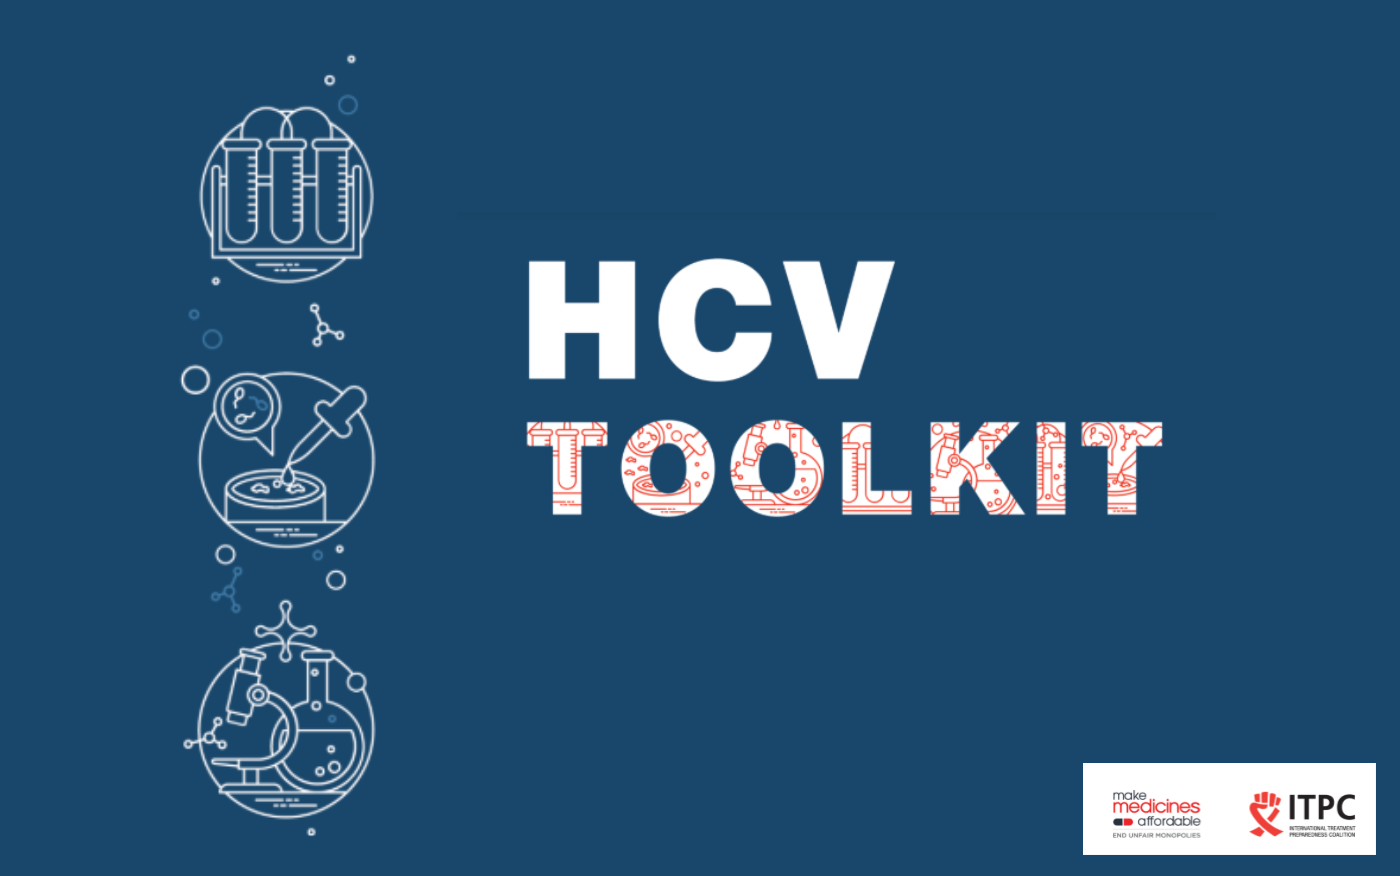 Hepatitis C virus (HCV) Toolkit